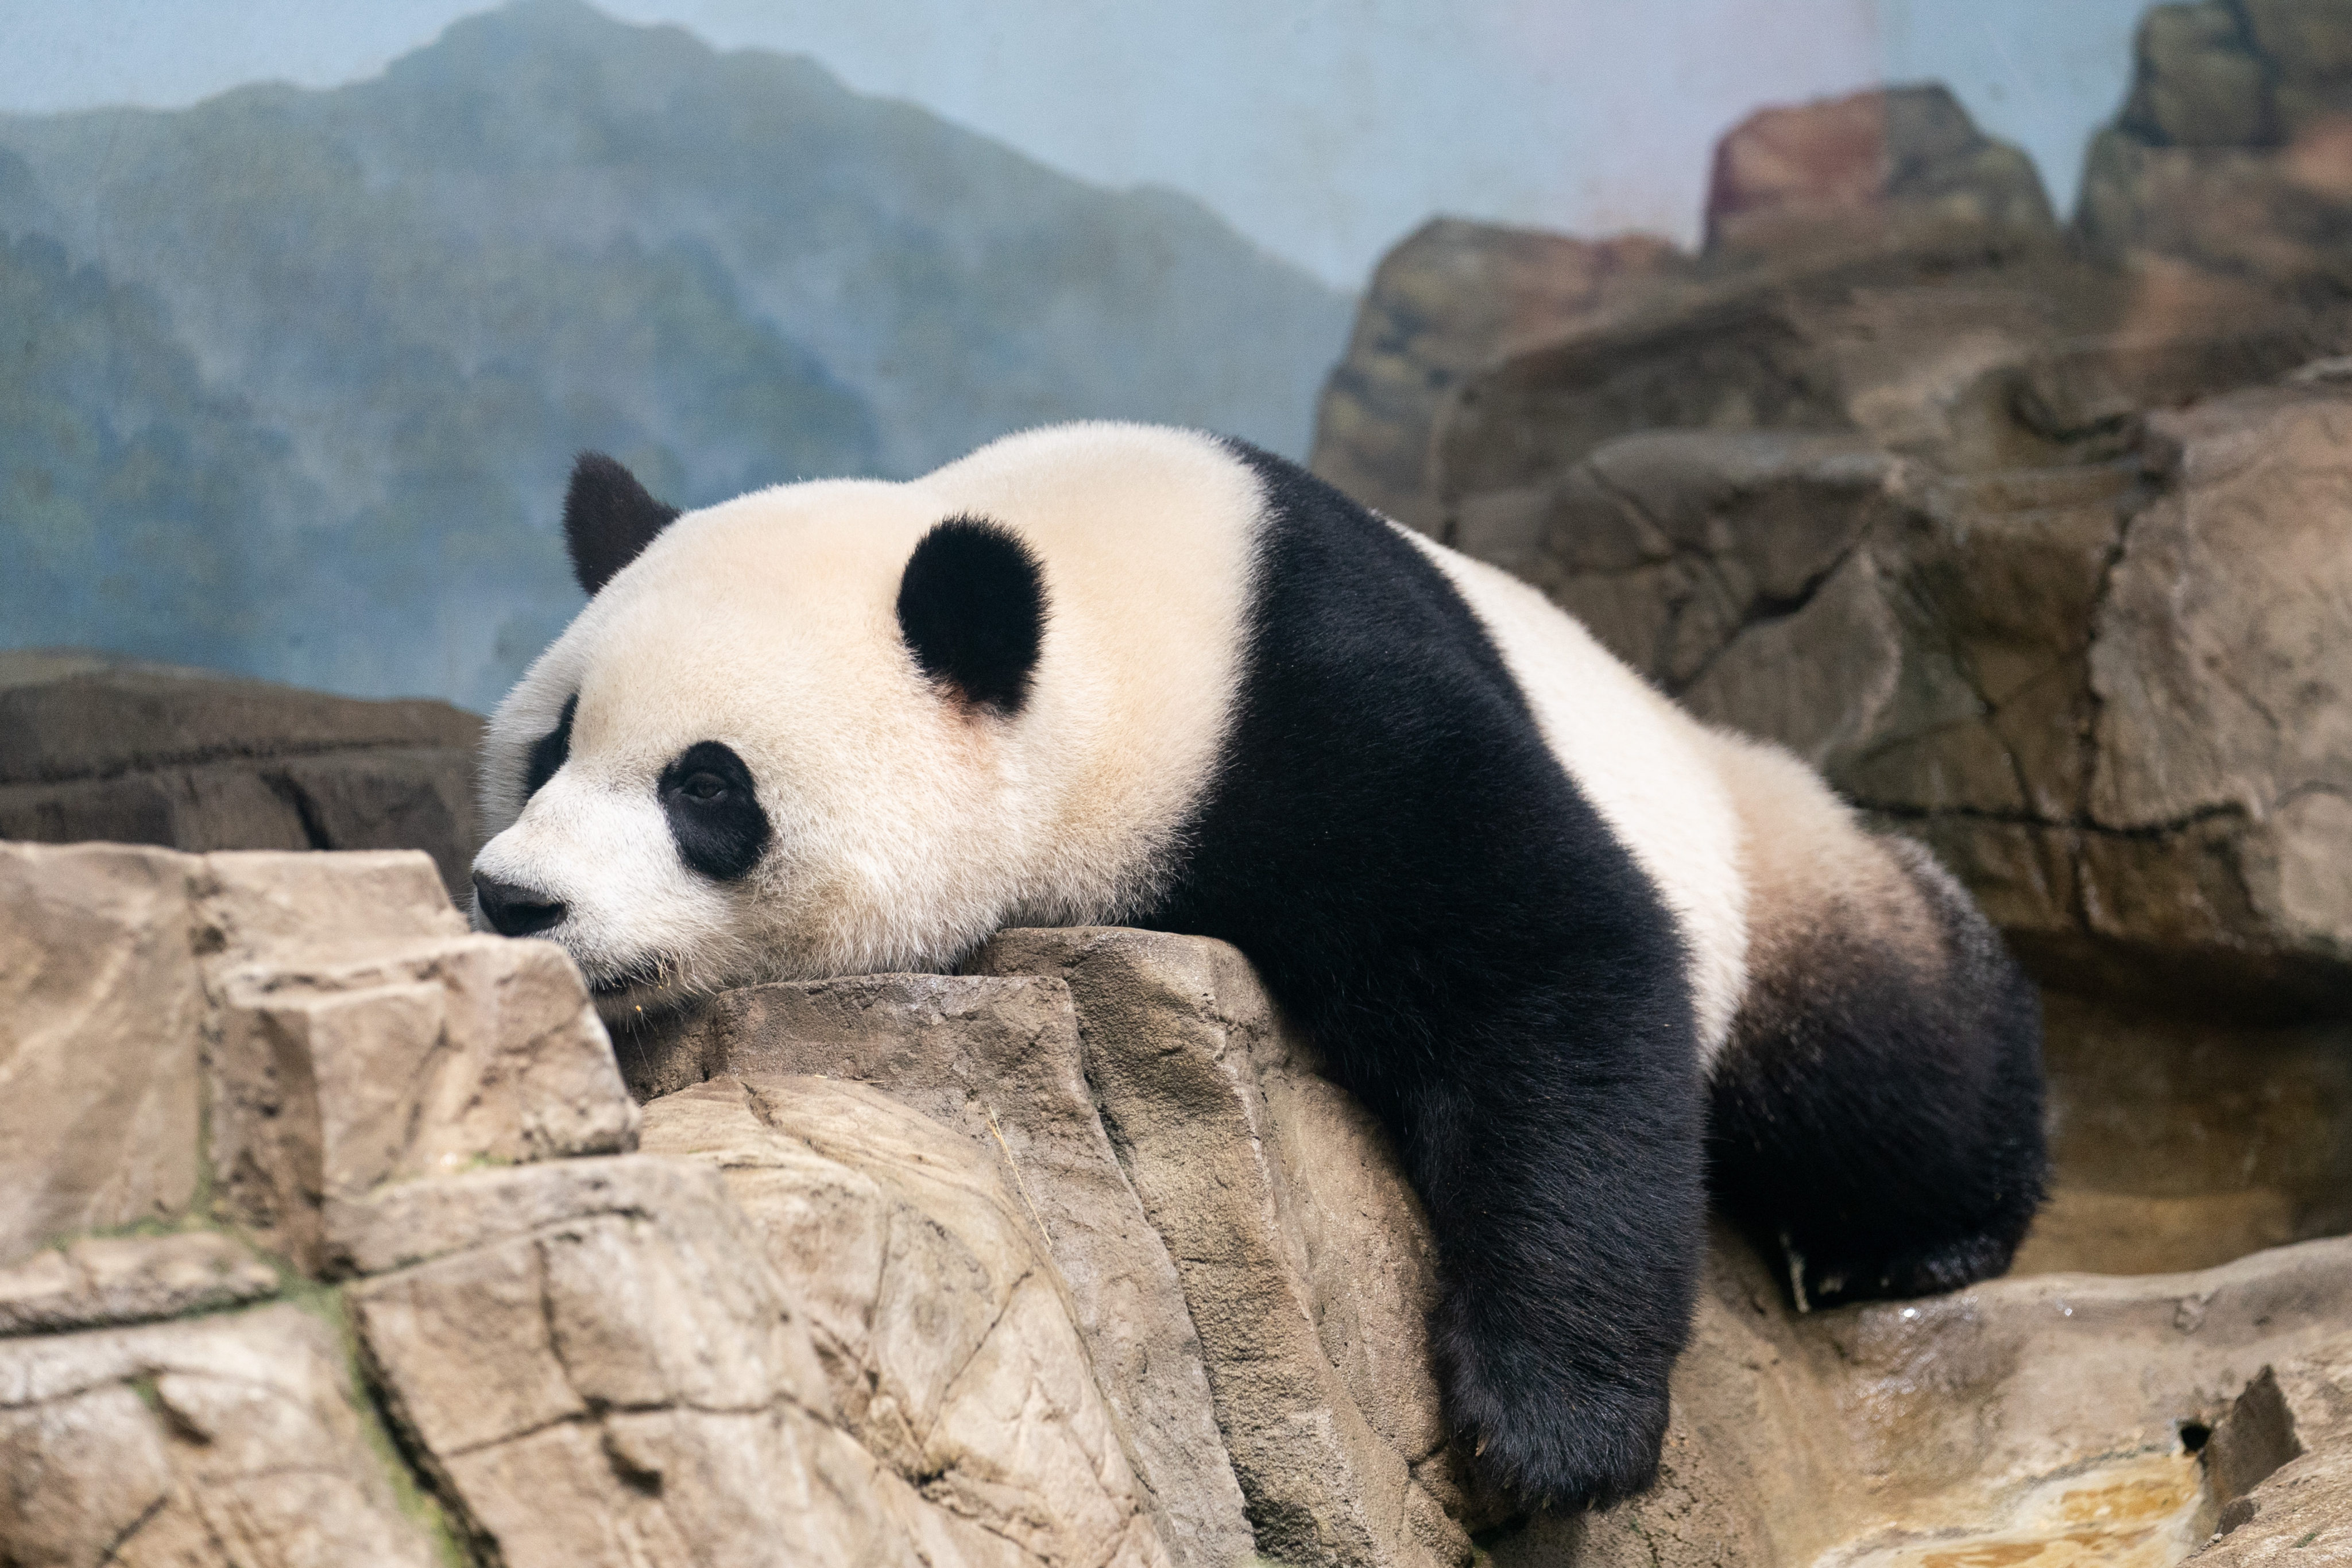 China may send more pandas to the U.S. : NPR